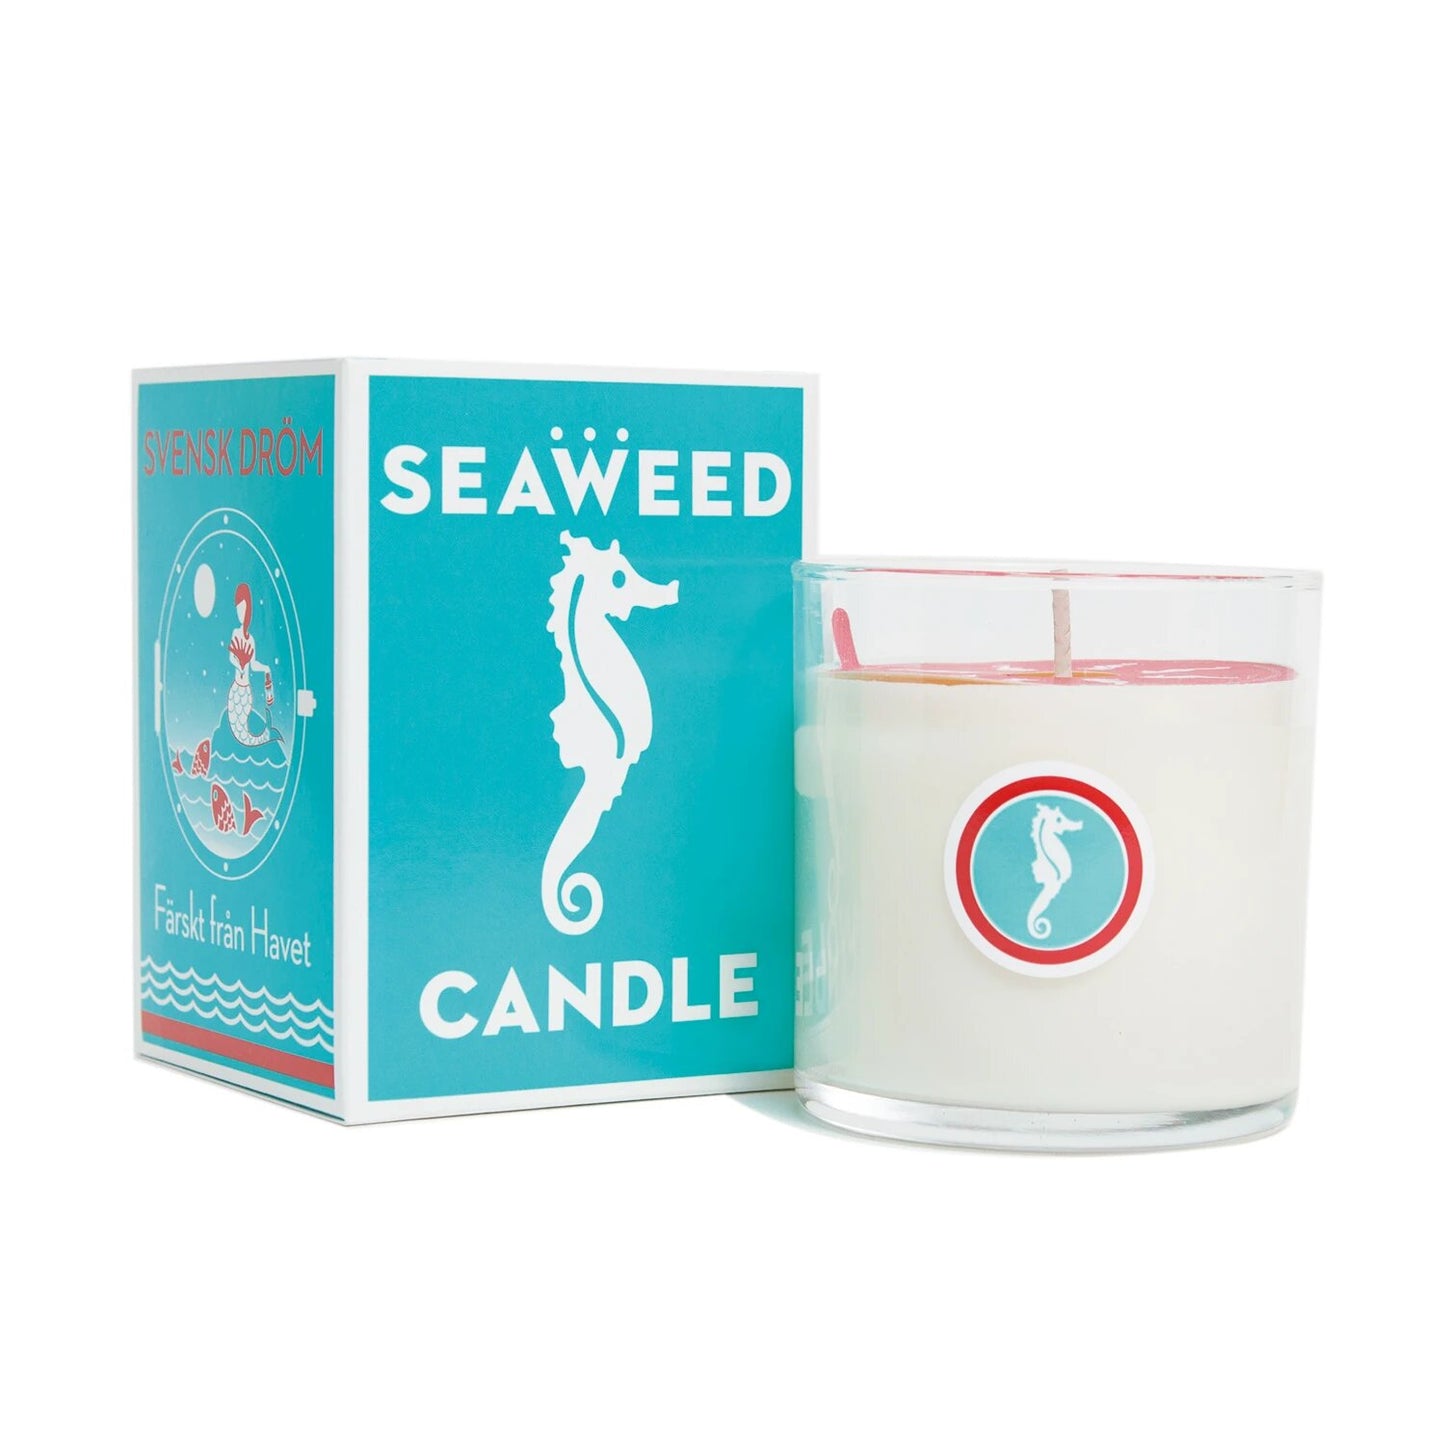 Swedish Dream Seaweed Candle